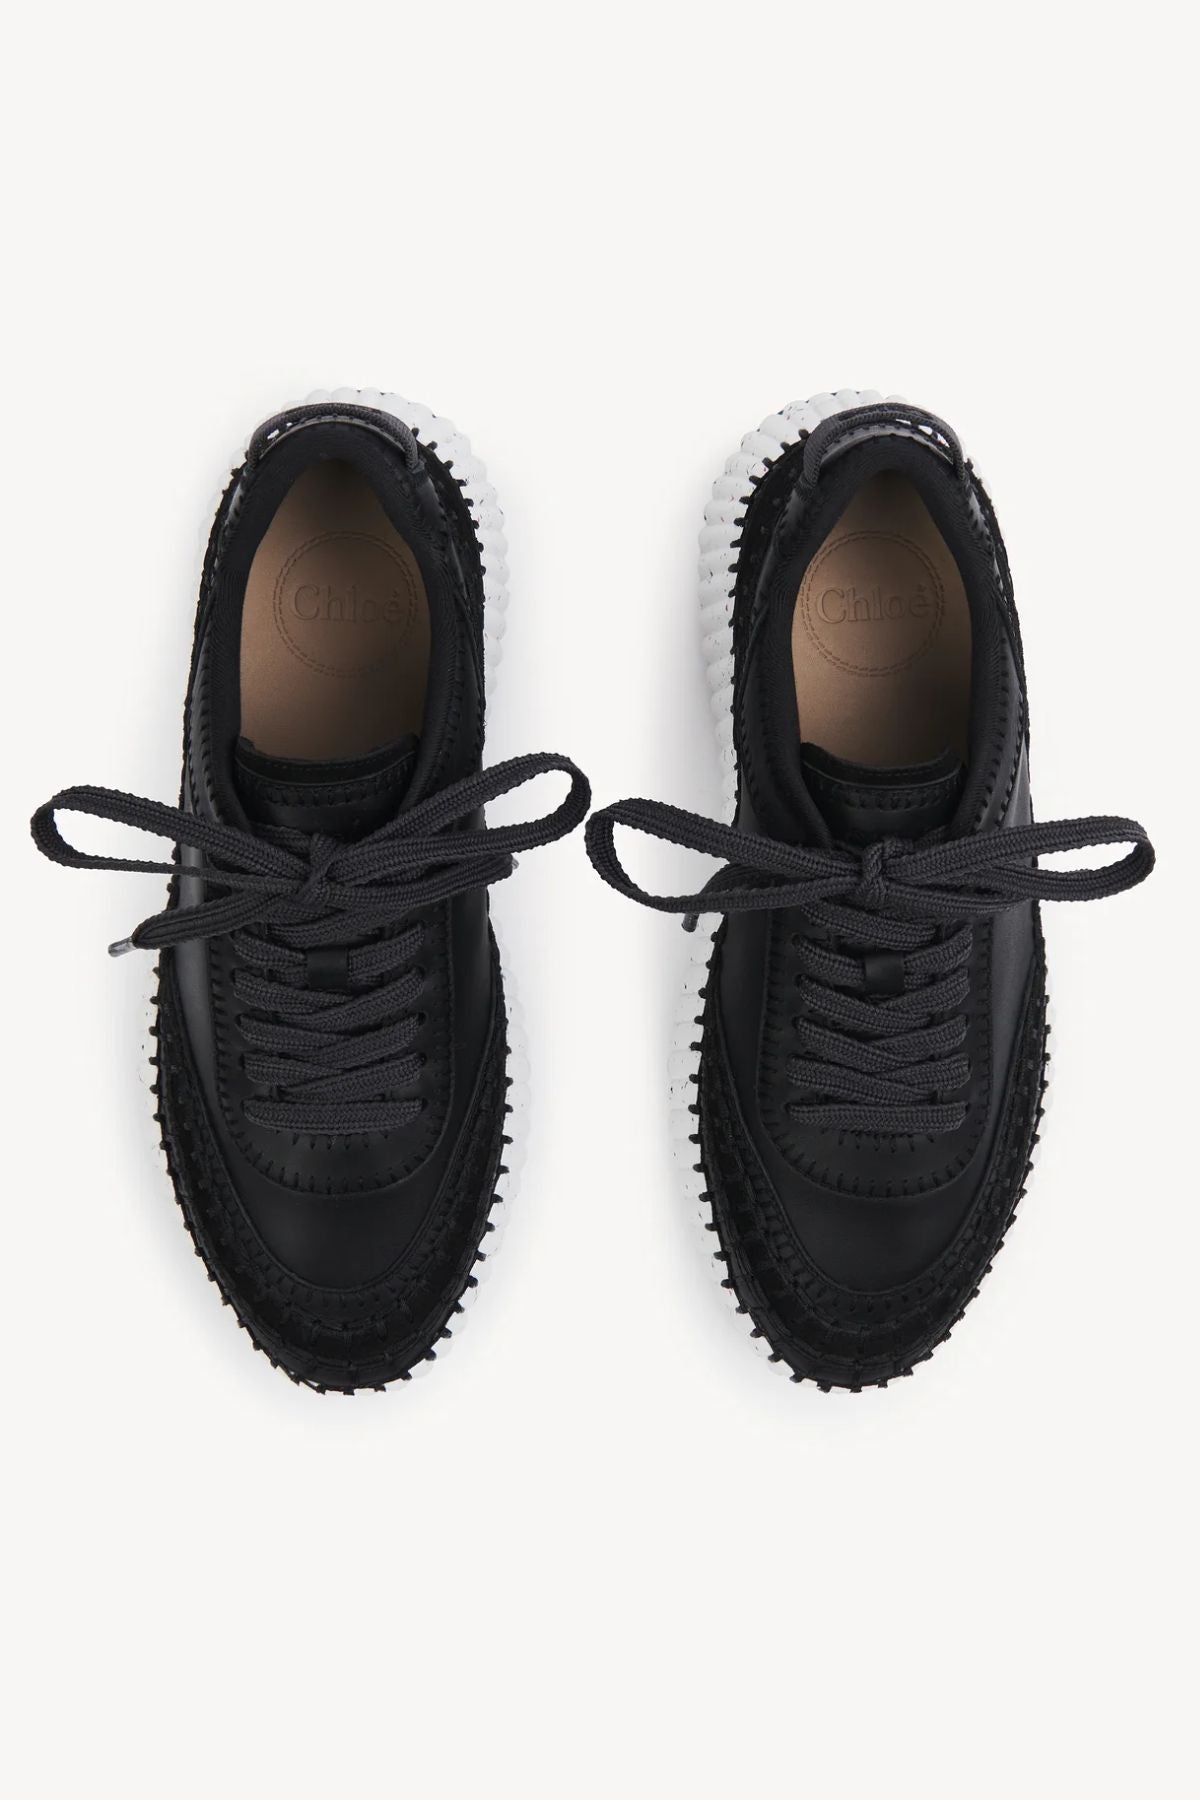 Chloé Leather Combo Nama Sneaker - Black